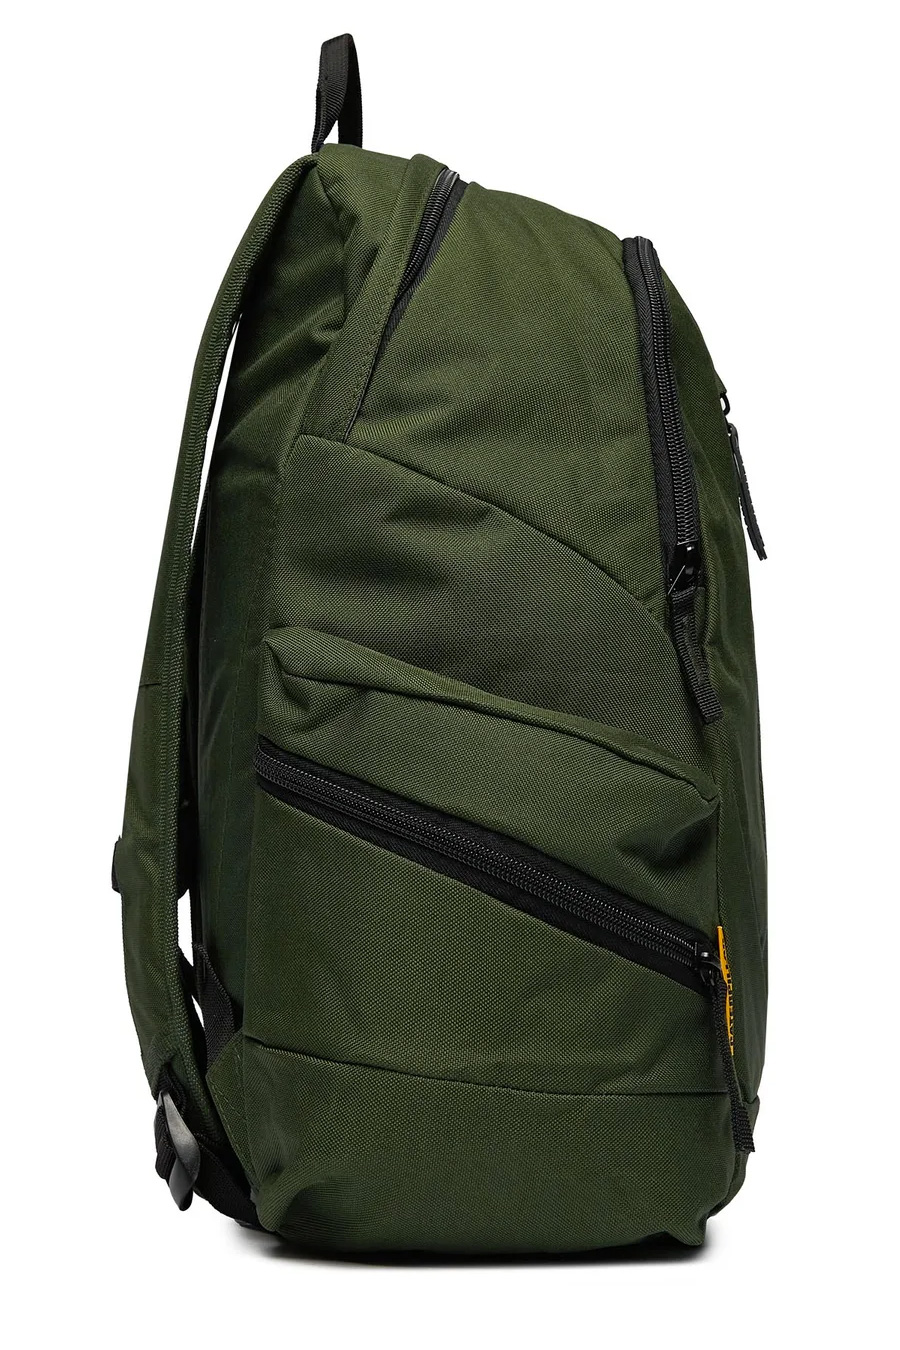 Backpack CAT 83541-542